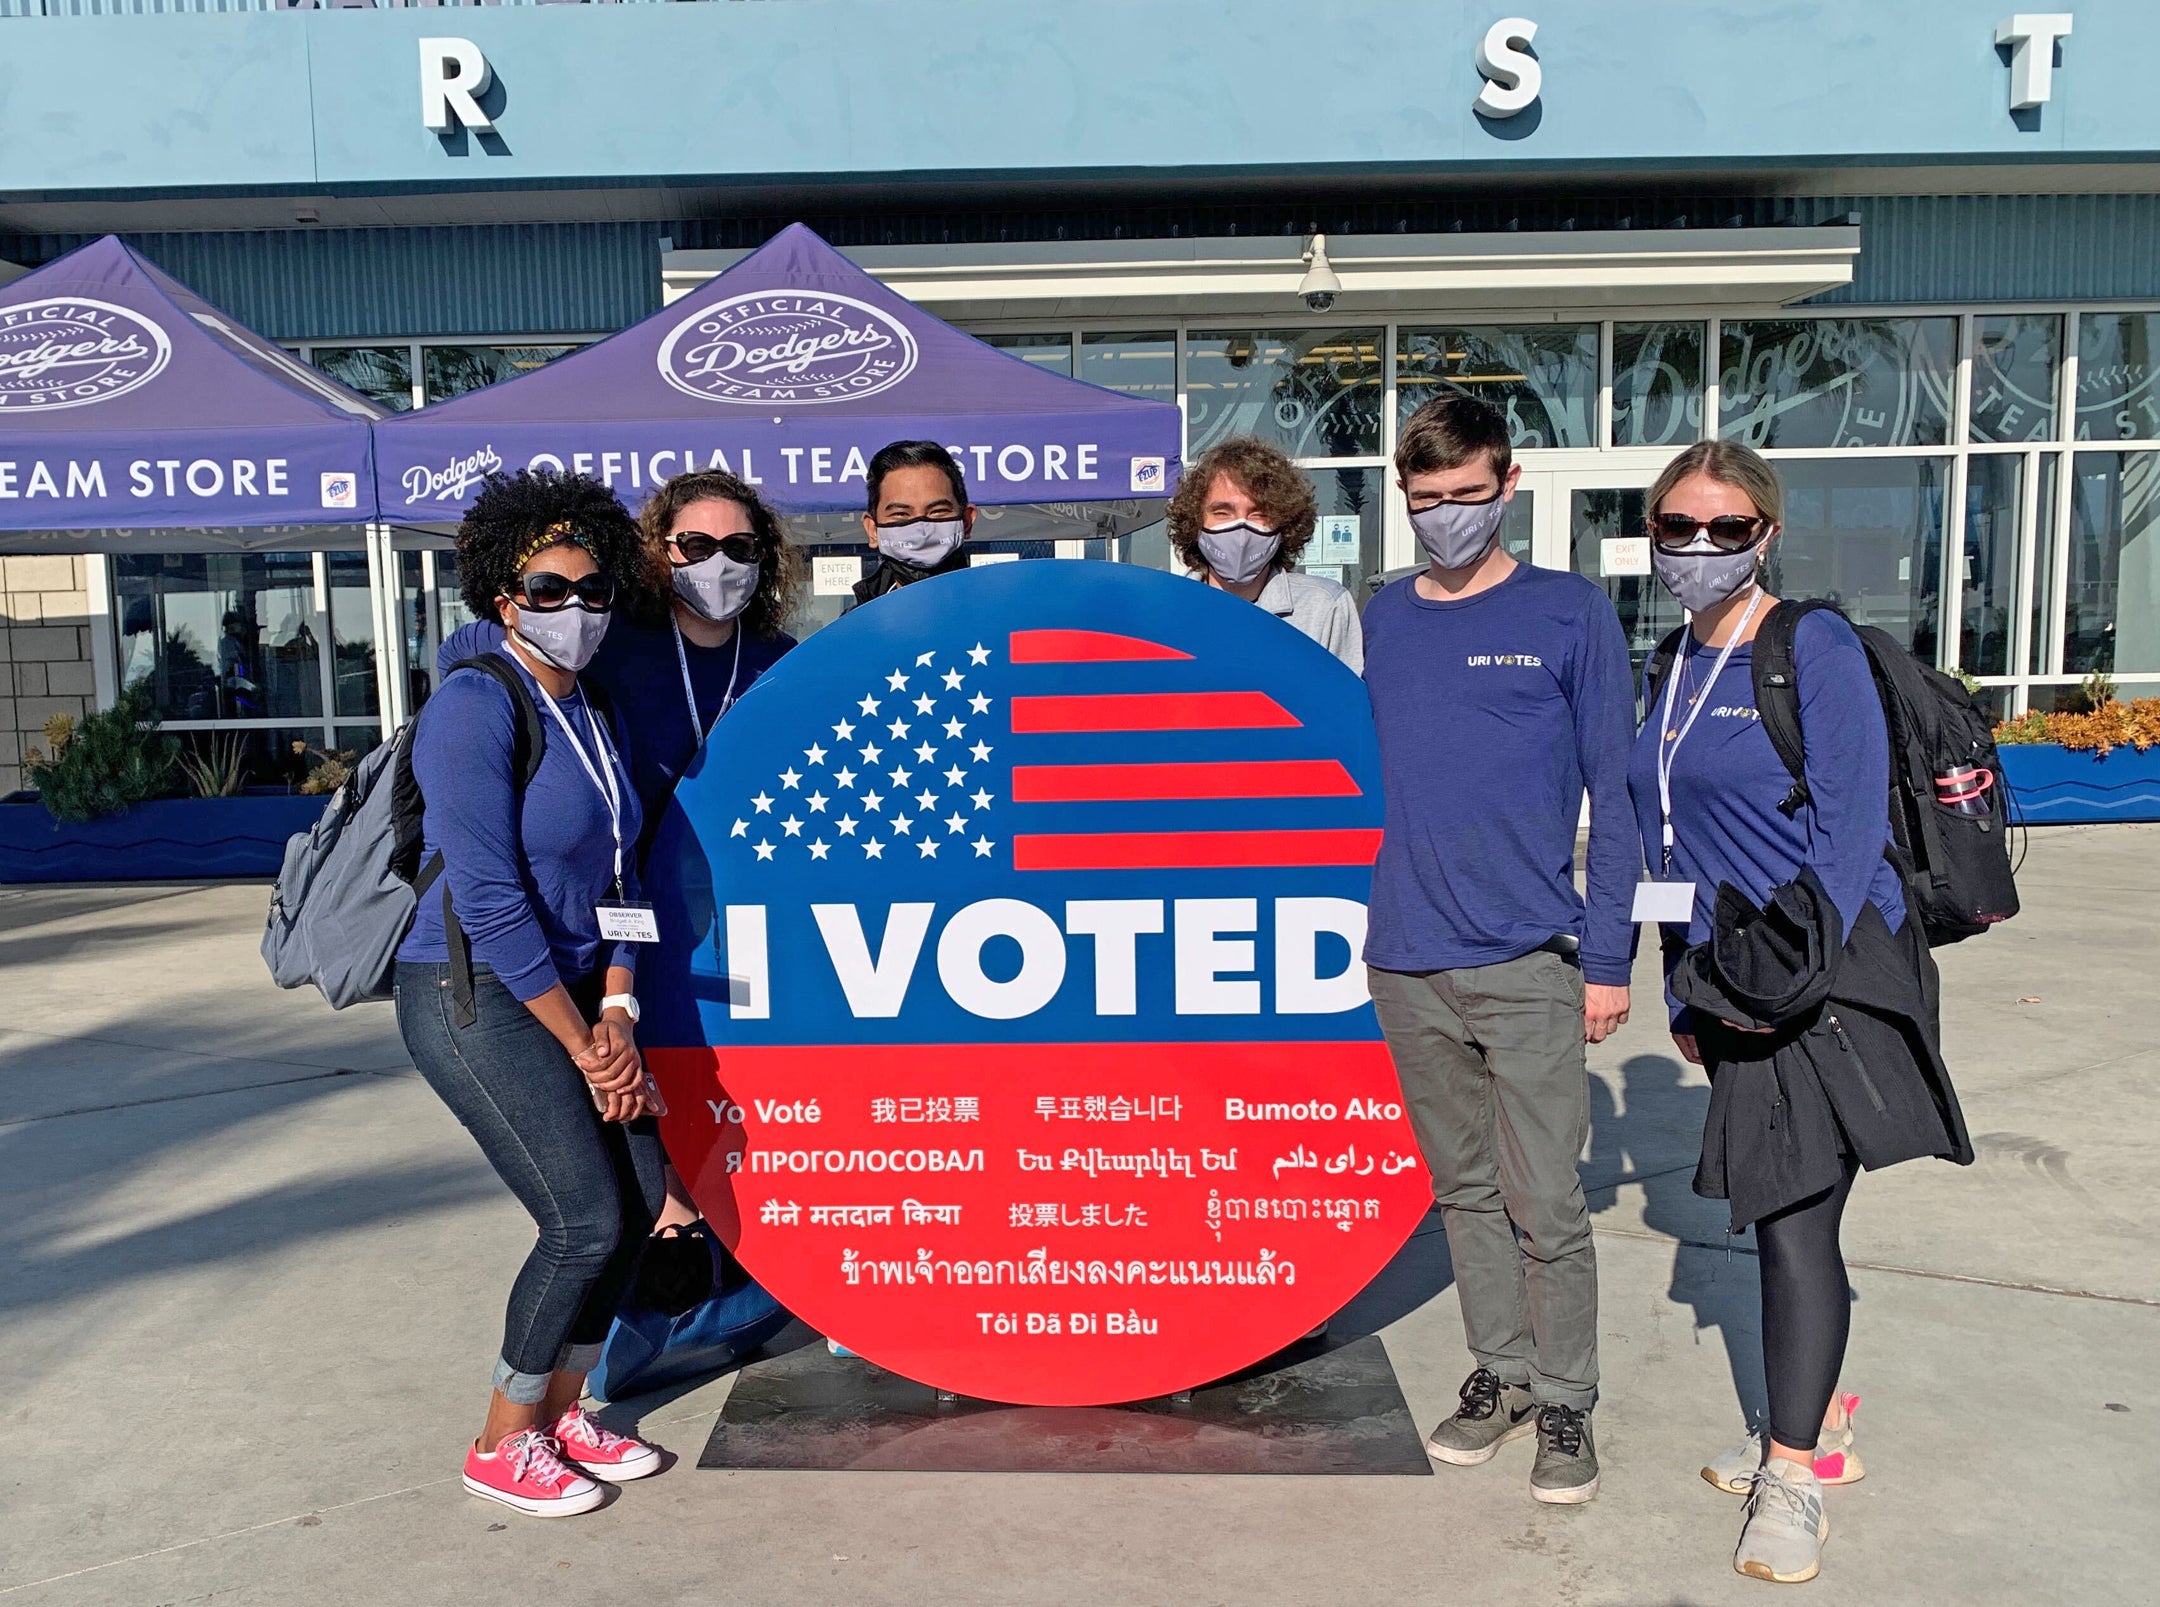 URI VOTES team outside of Dodger Stadium in Los Angeles